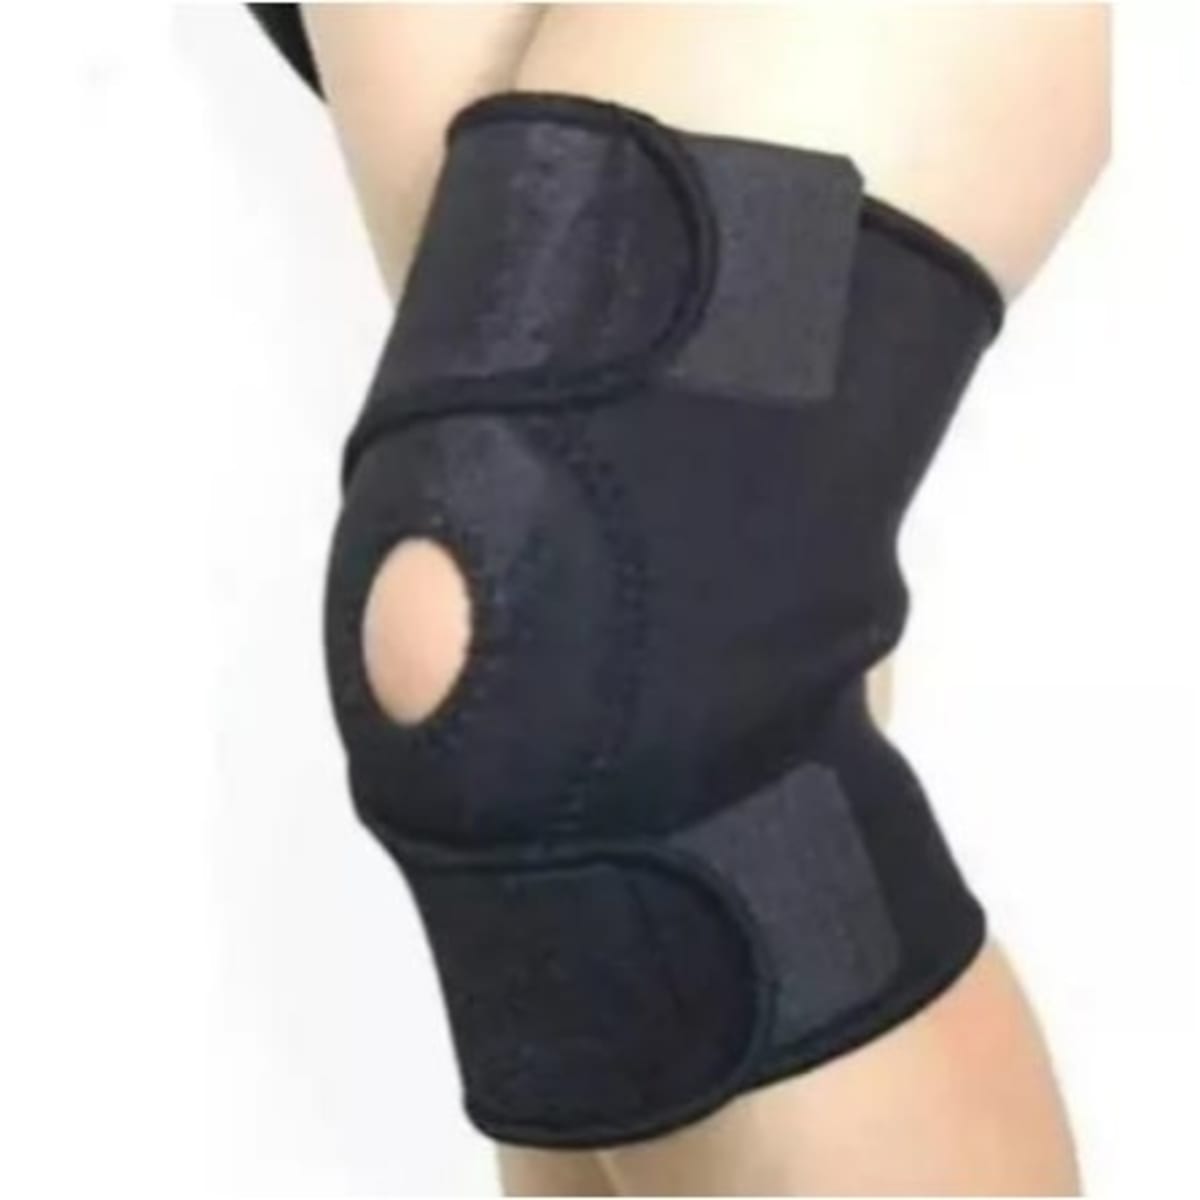 Patella Extra Knee Brace - Breathable neoprene knee brace